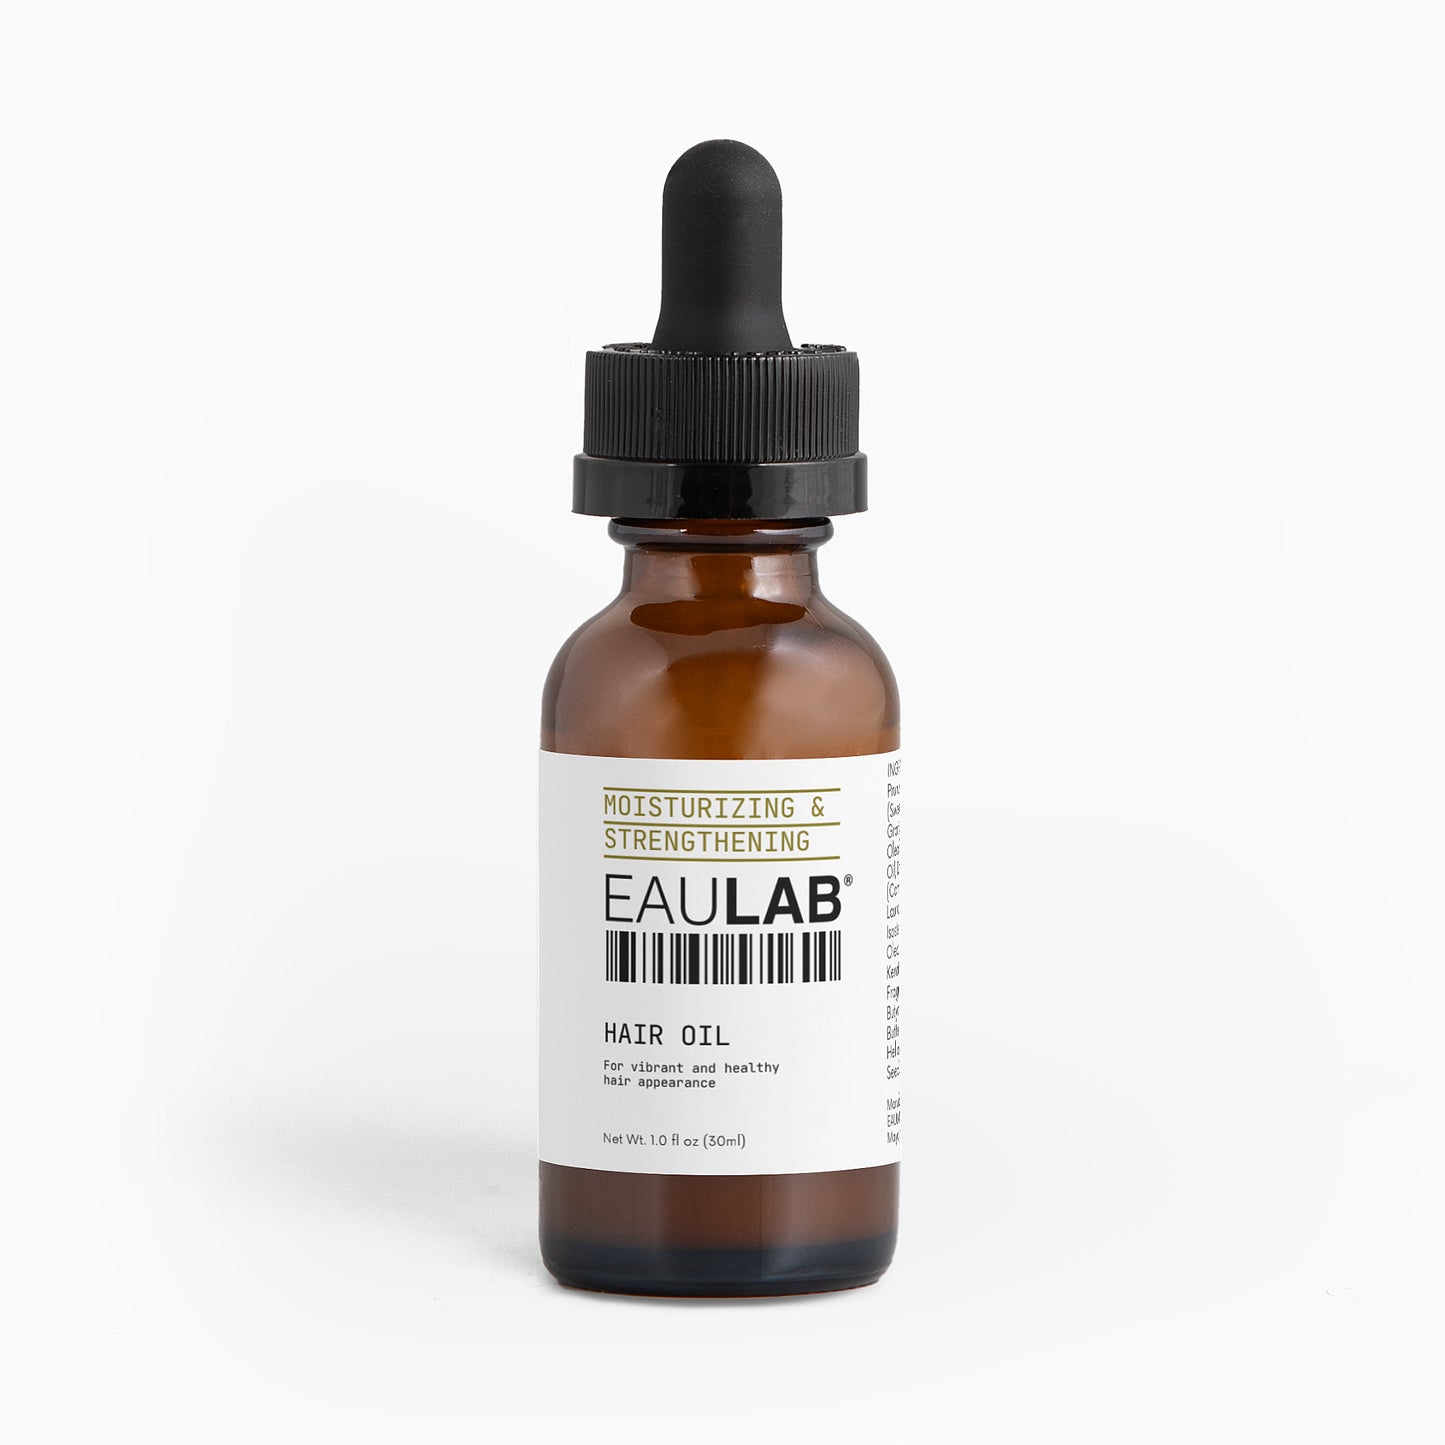 EAULAB® Moisturizing and Strengthening Hair Oil